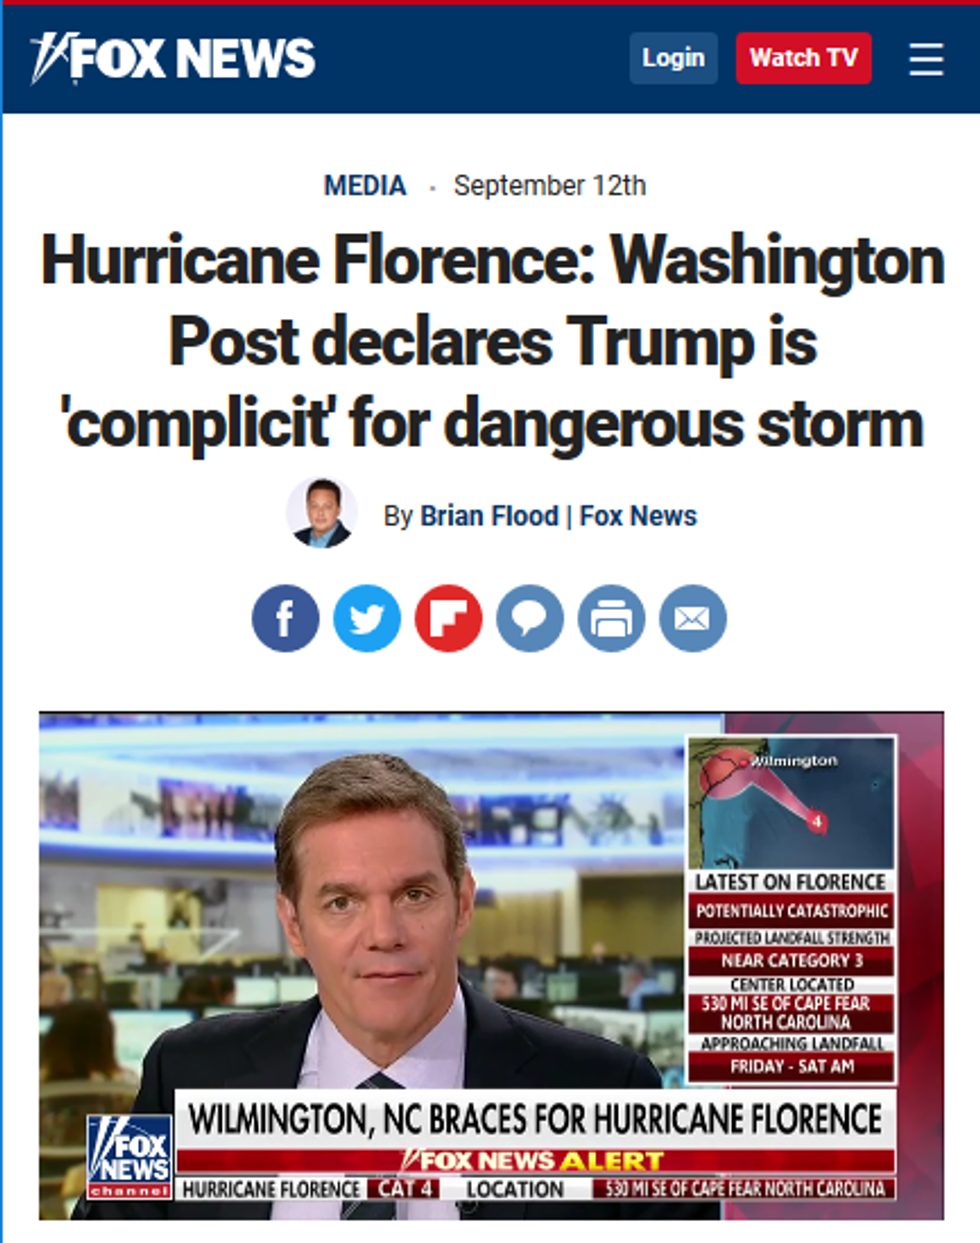 Fox News: Hurricane Florence: Washington Post declares Trump is 'complicit' for dangerous storm